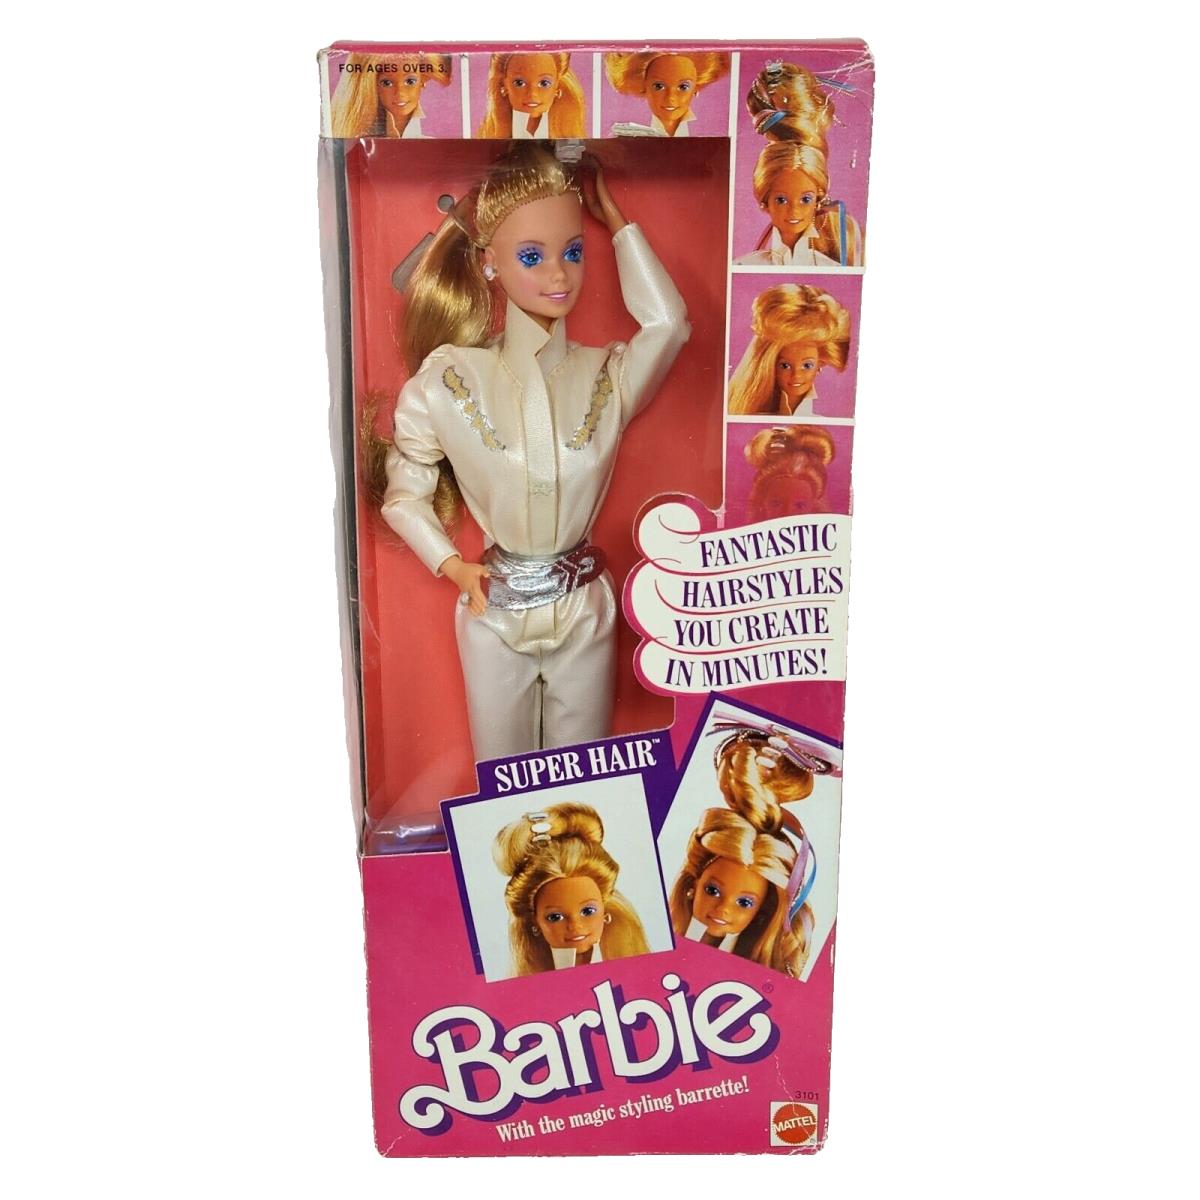 Vintage 1986 Super Hair Barbie Doll Magic Styling Barrette Mattel 3101